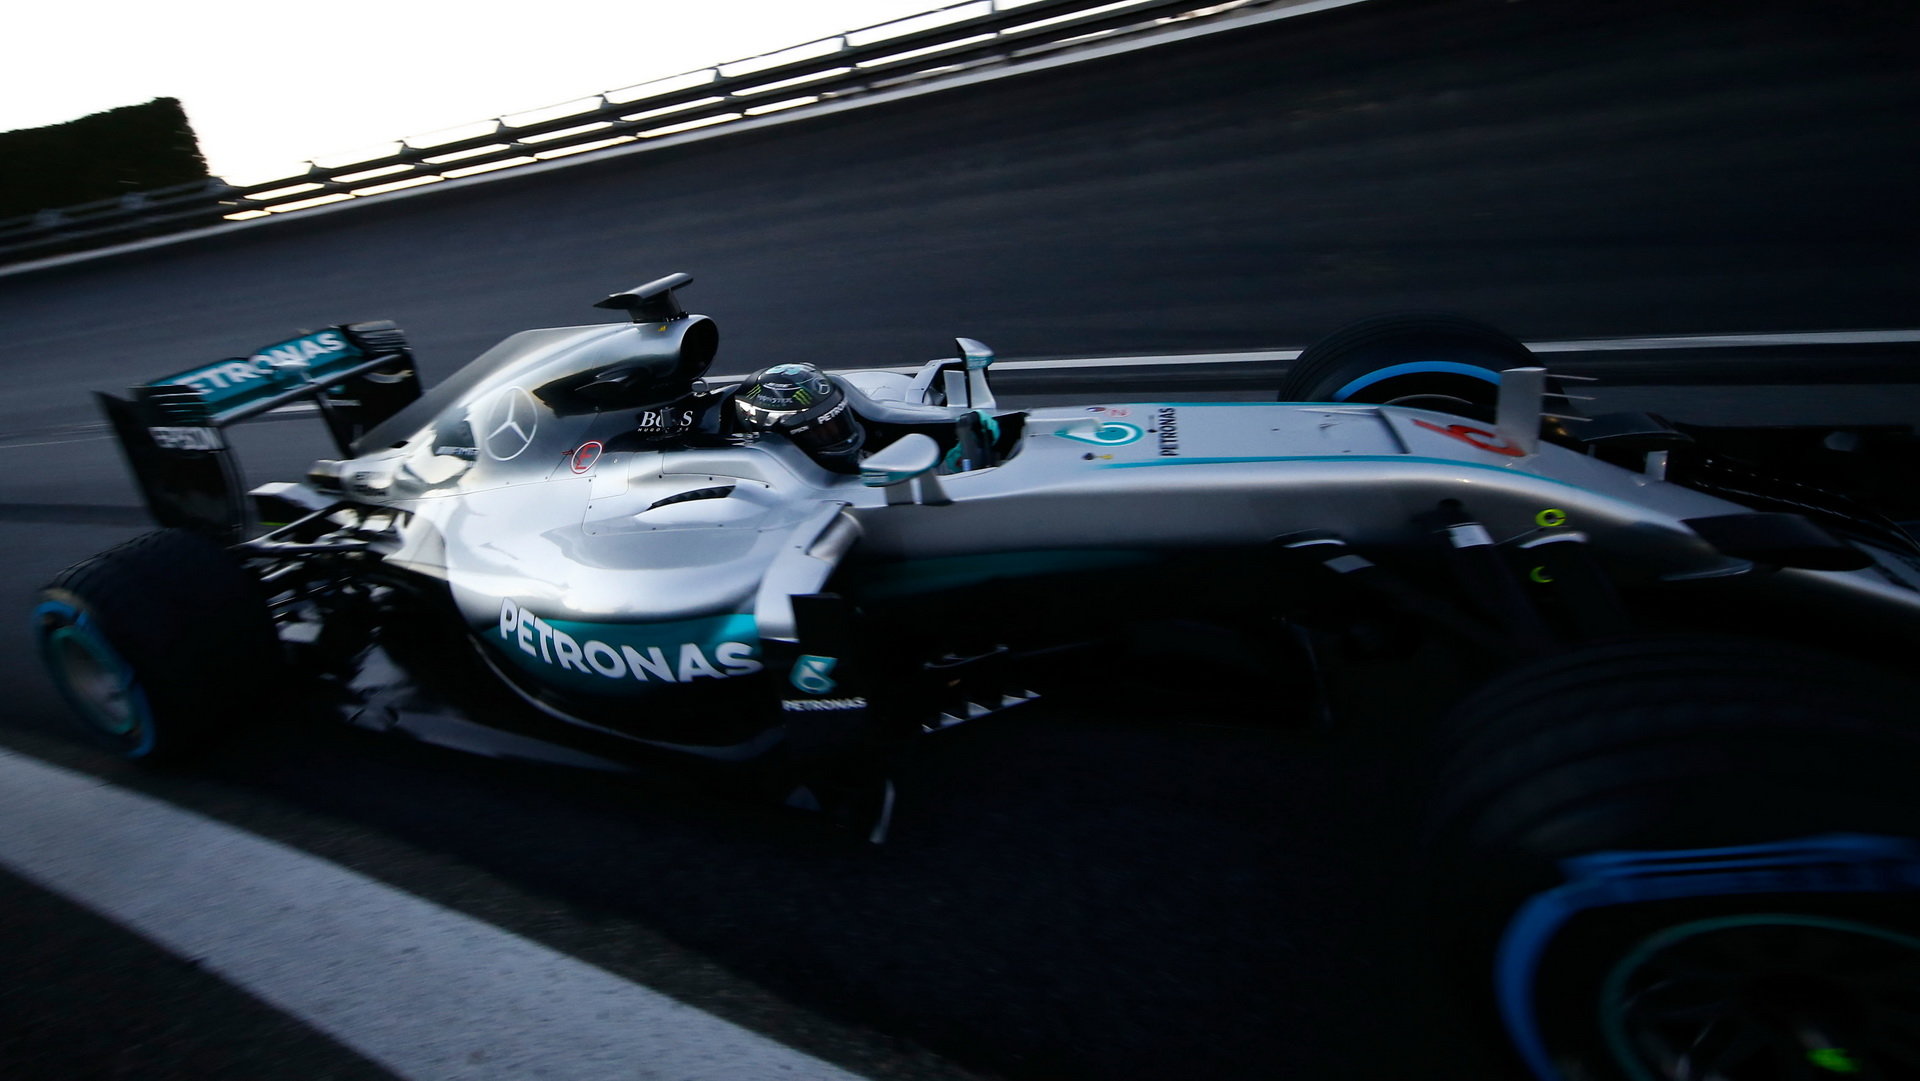 Nico Rosberg si užívá poslední chvíle v monopostu Mercedesu